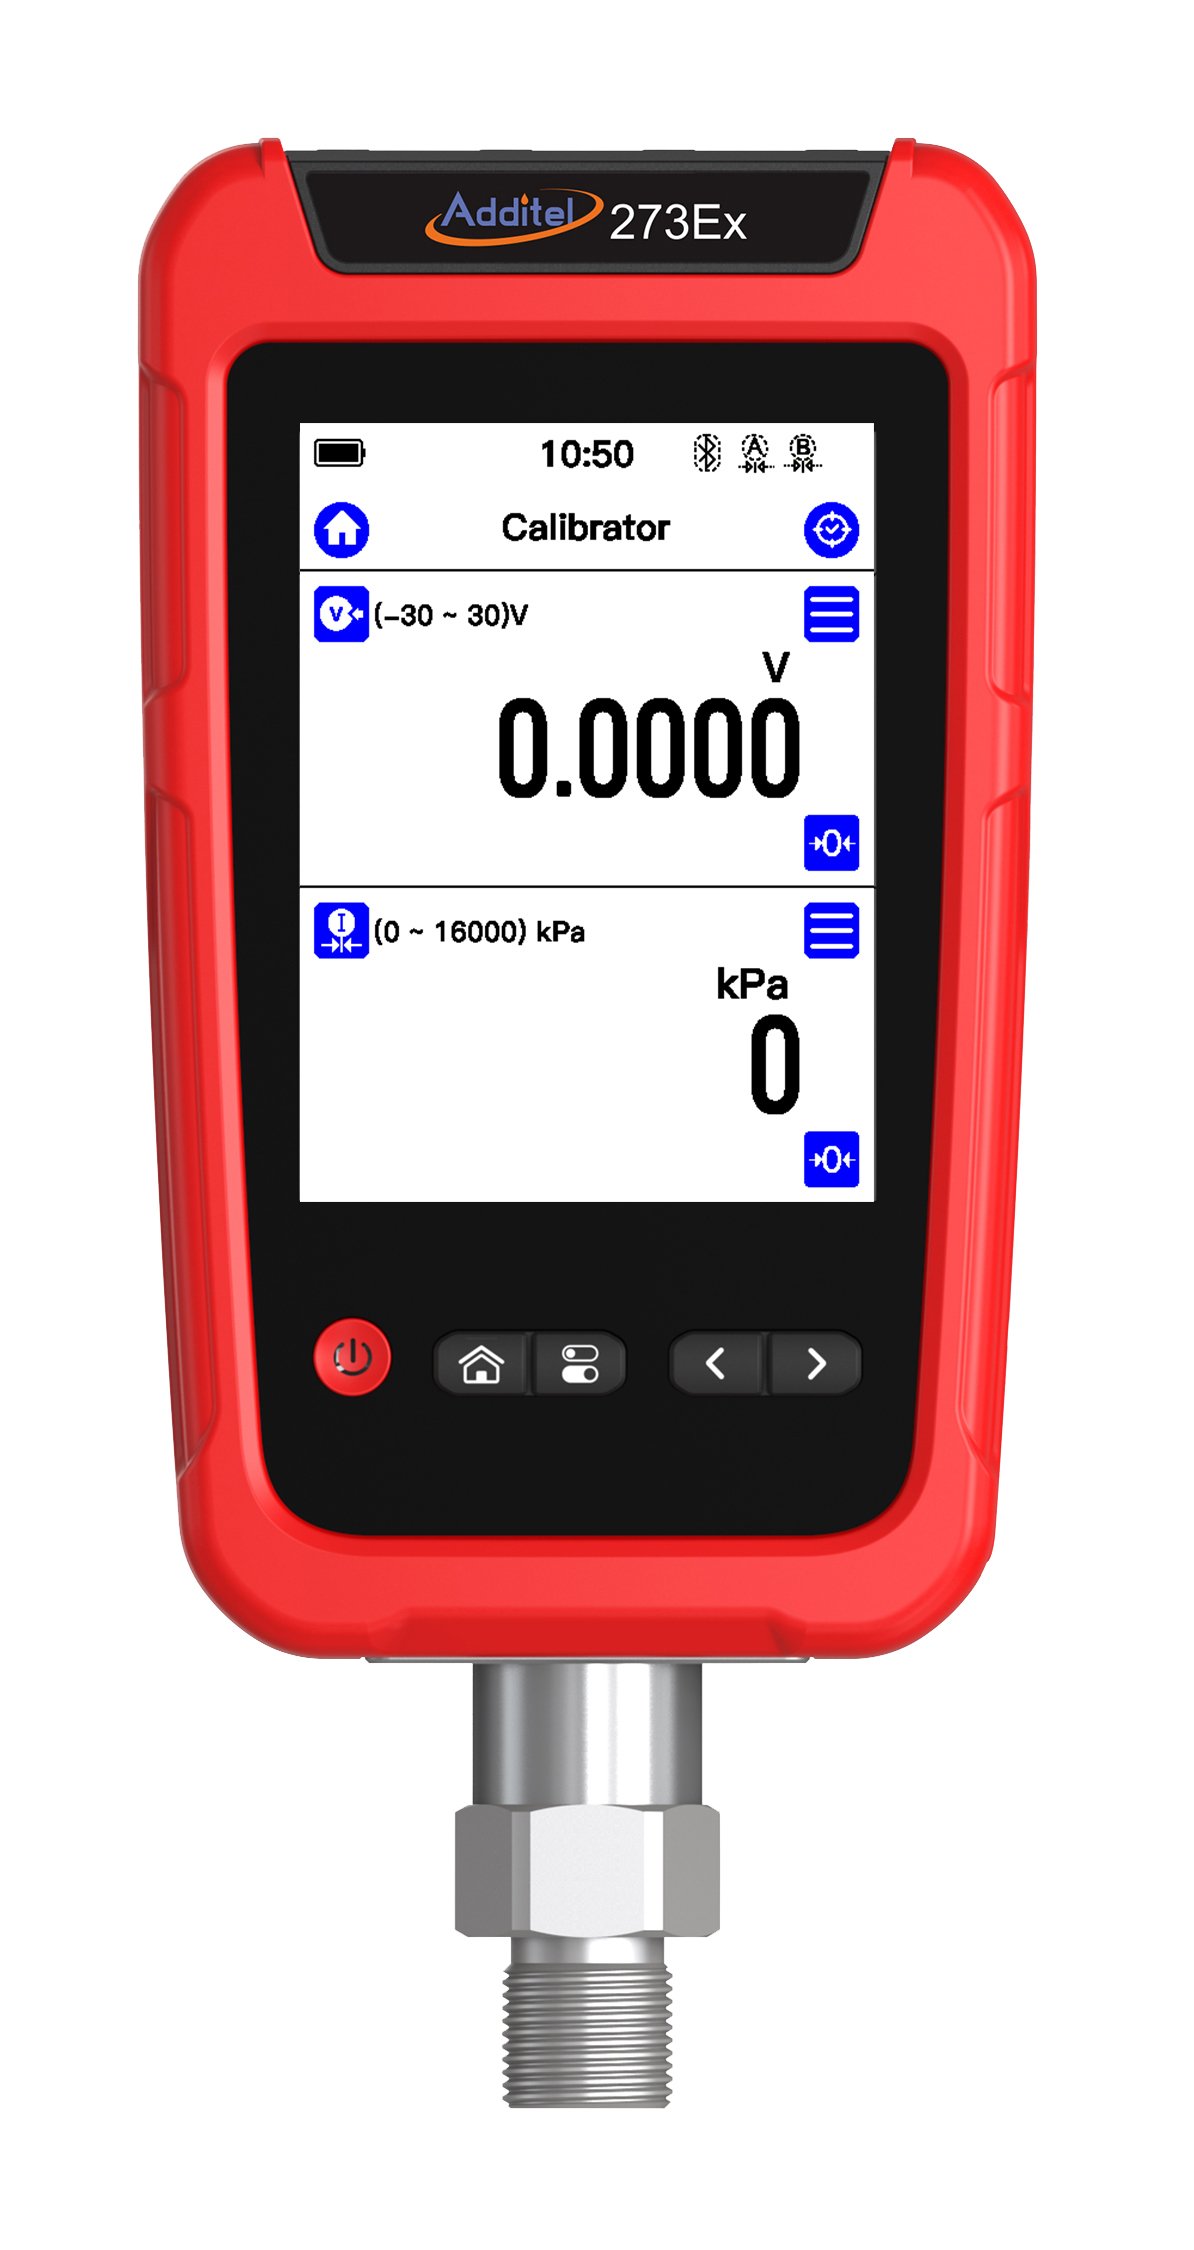 Introducing the Additel 273Ex Intrinsically Safe Handheld Pressure Calibrator